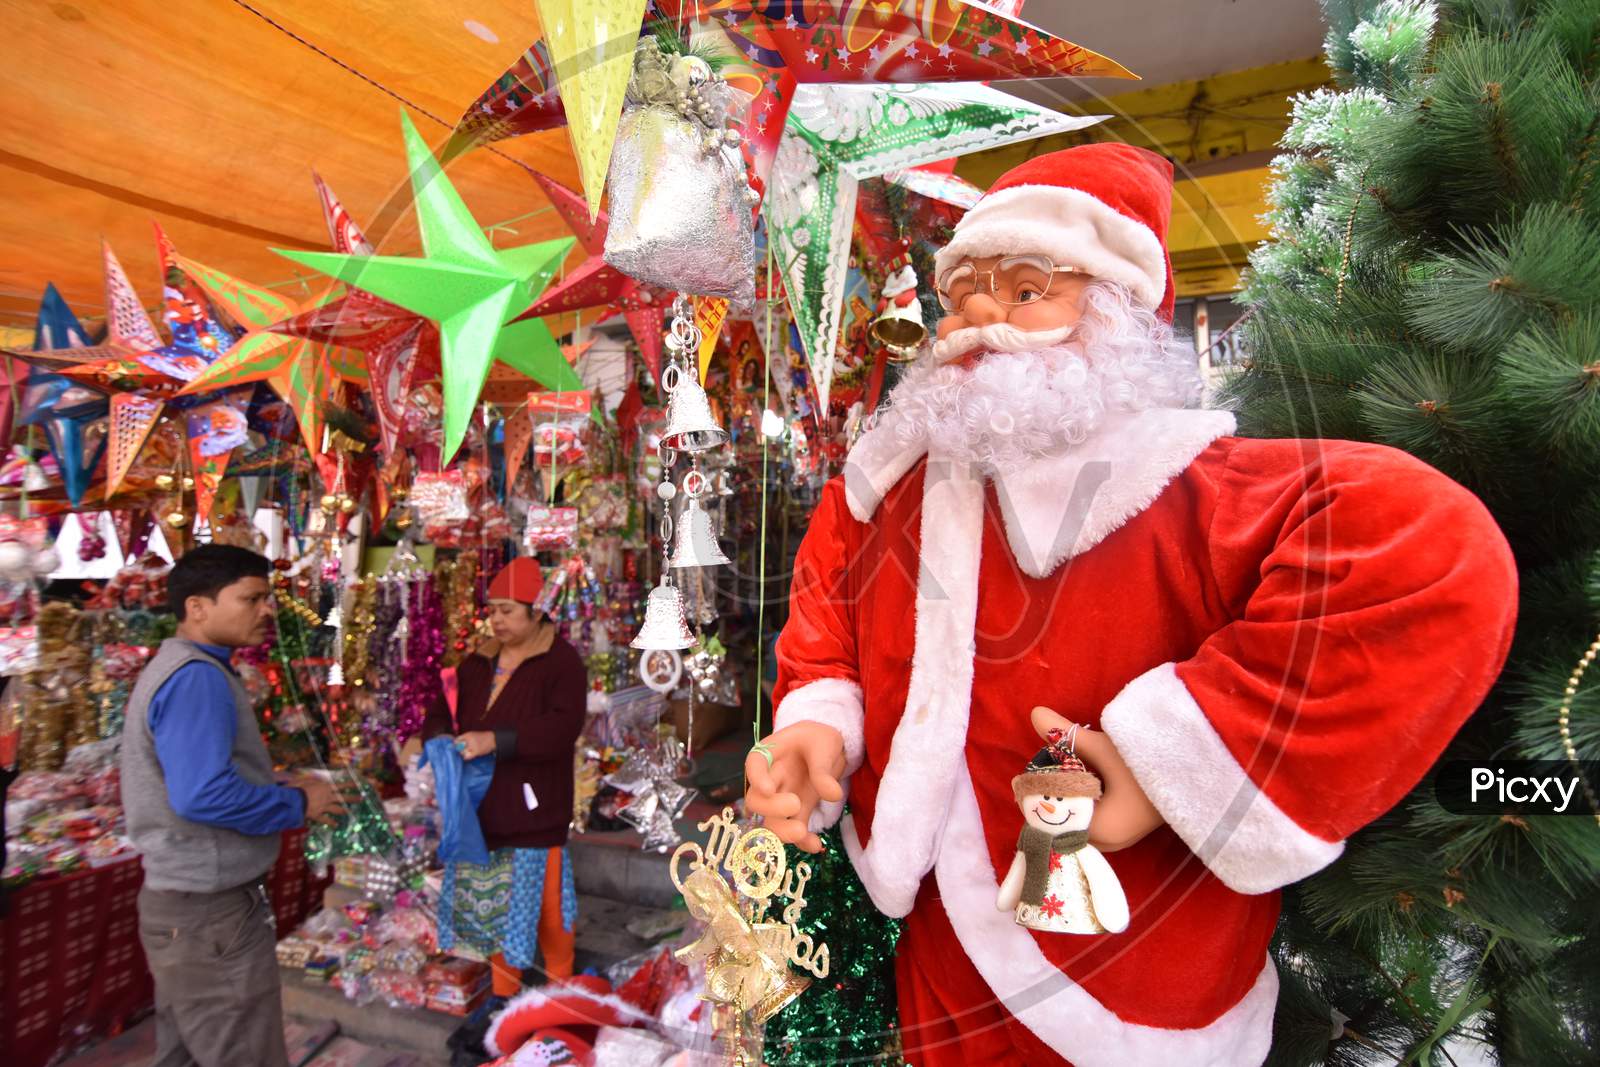 Christmas Decorative Articles in Shops In a Market In Guwahati, Assam